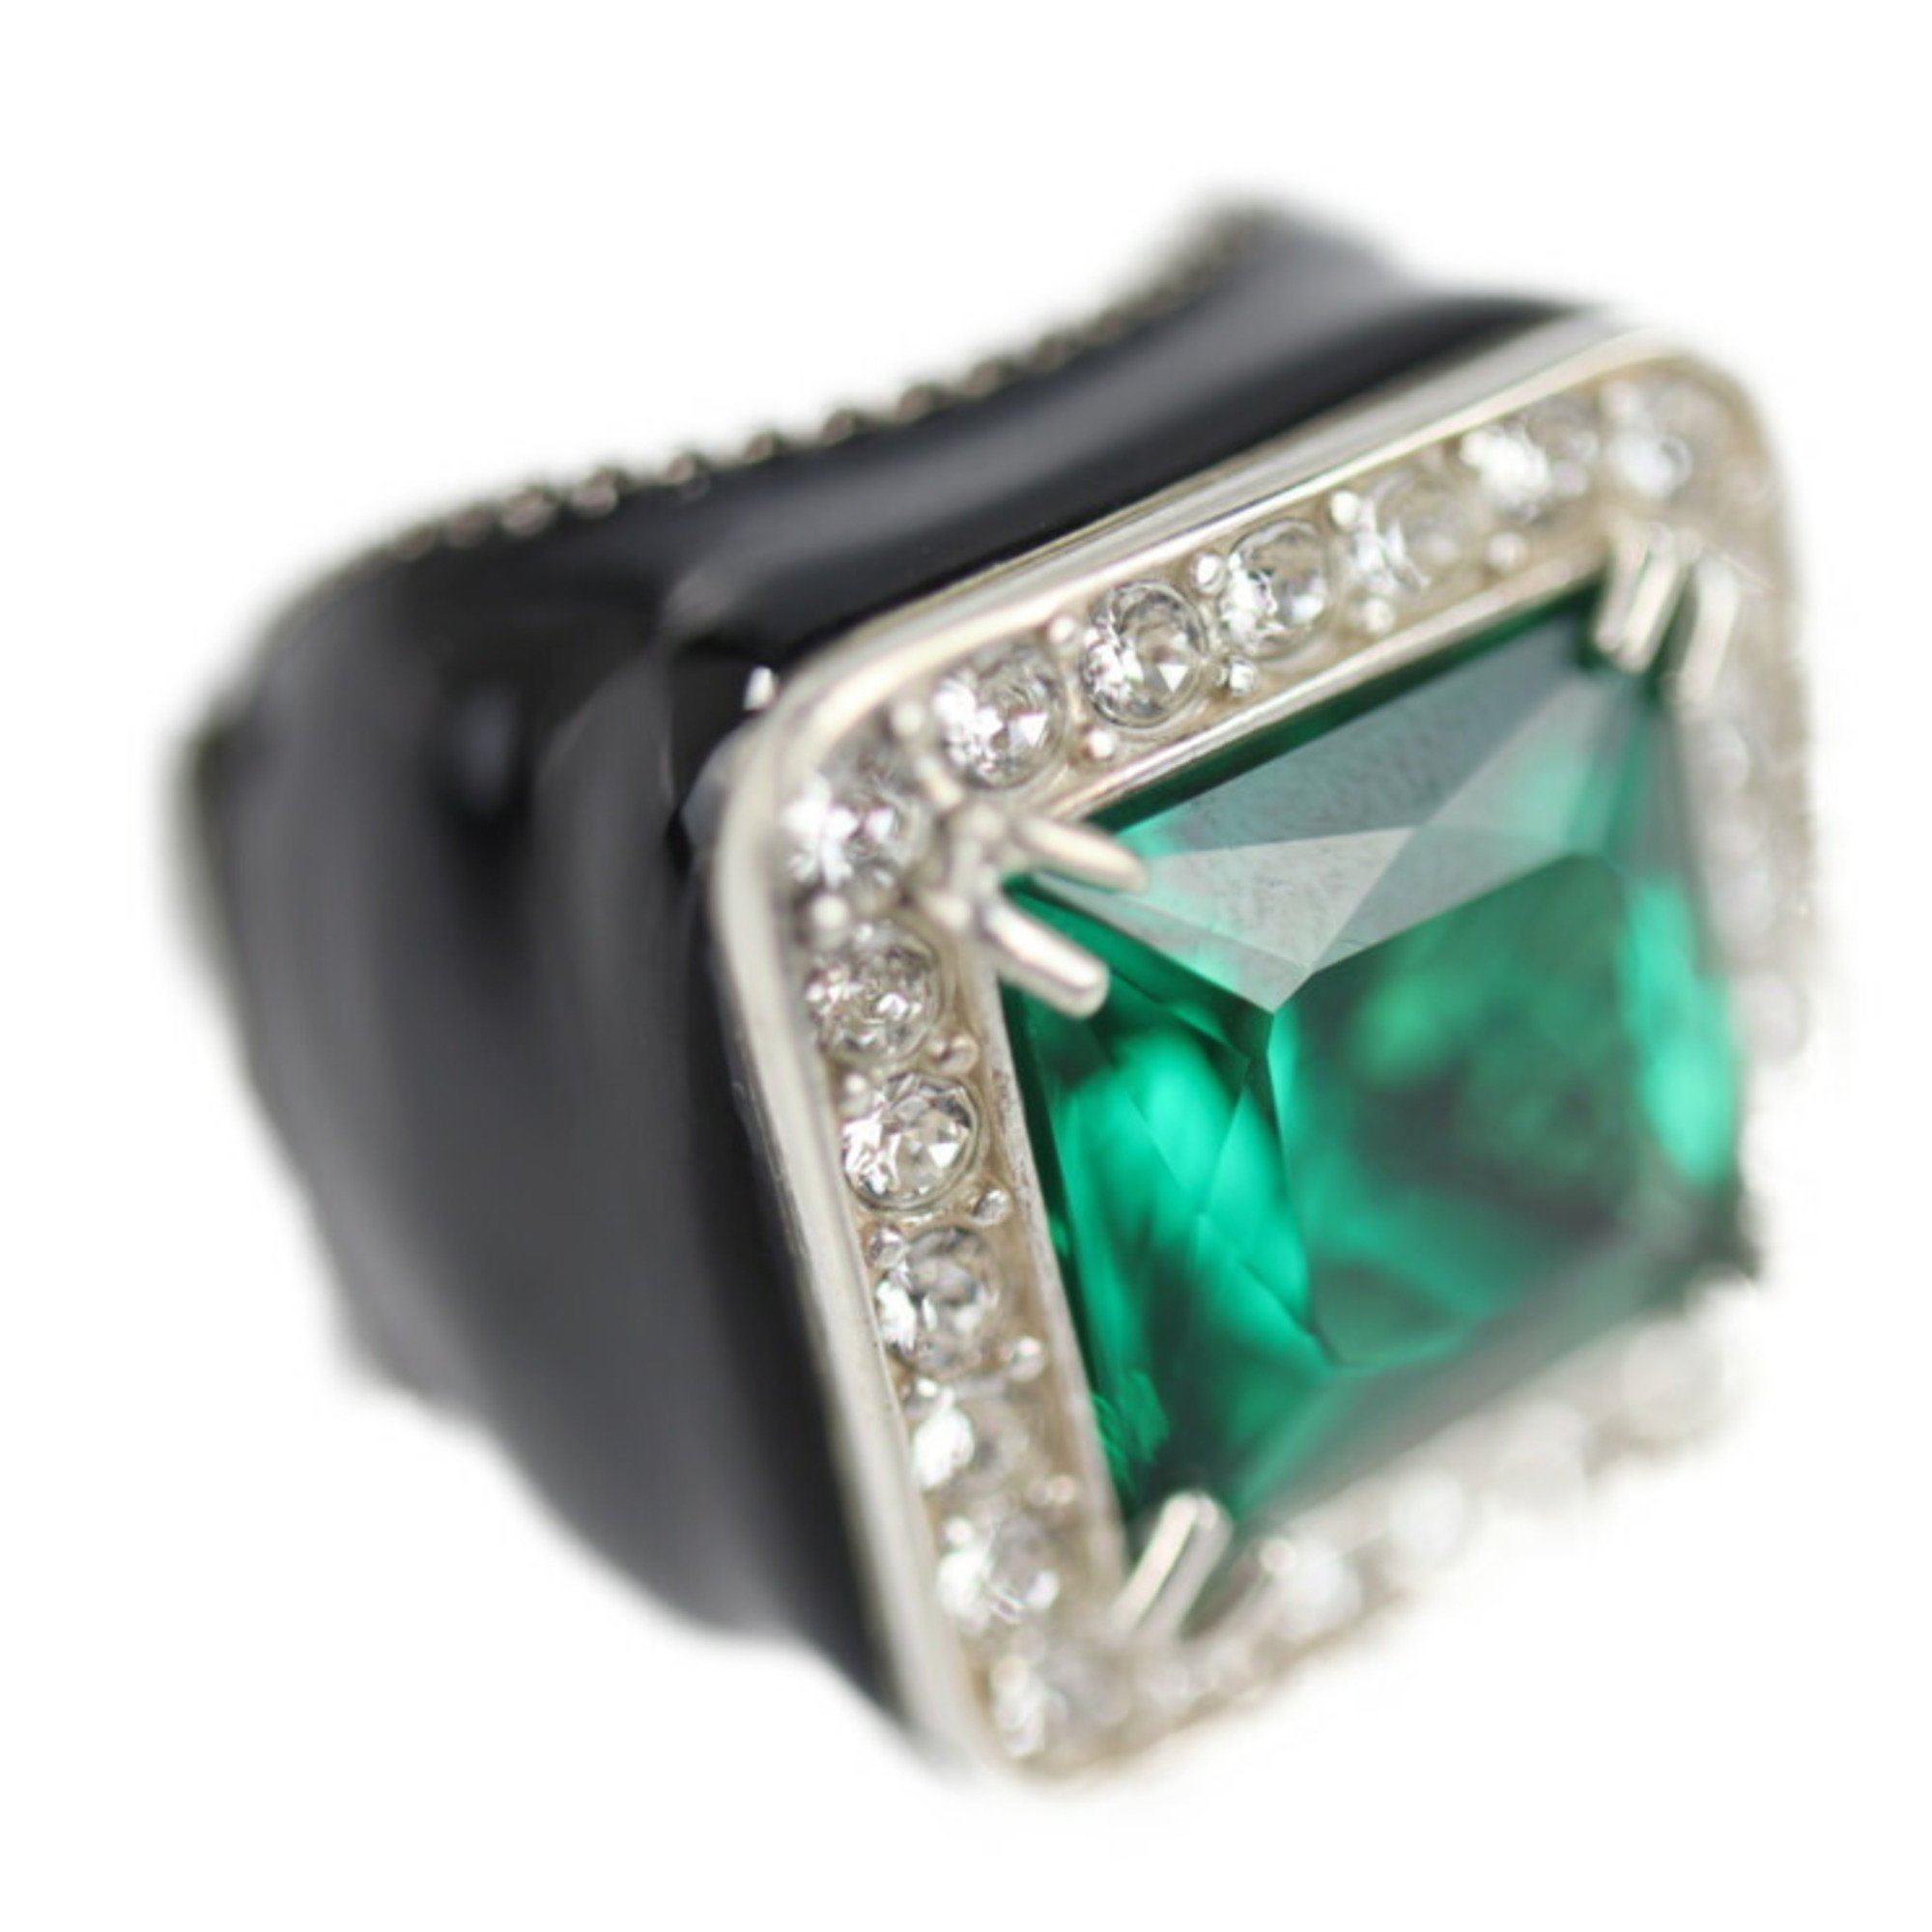 GUCCI Gucci ring 538037-J7422 notation size 9 silver 925 rhinestone crystal green black